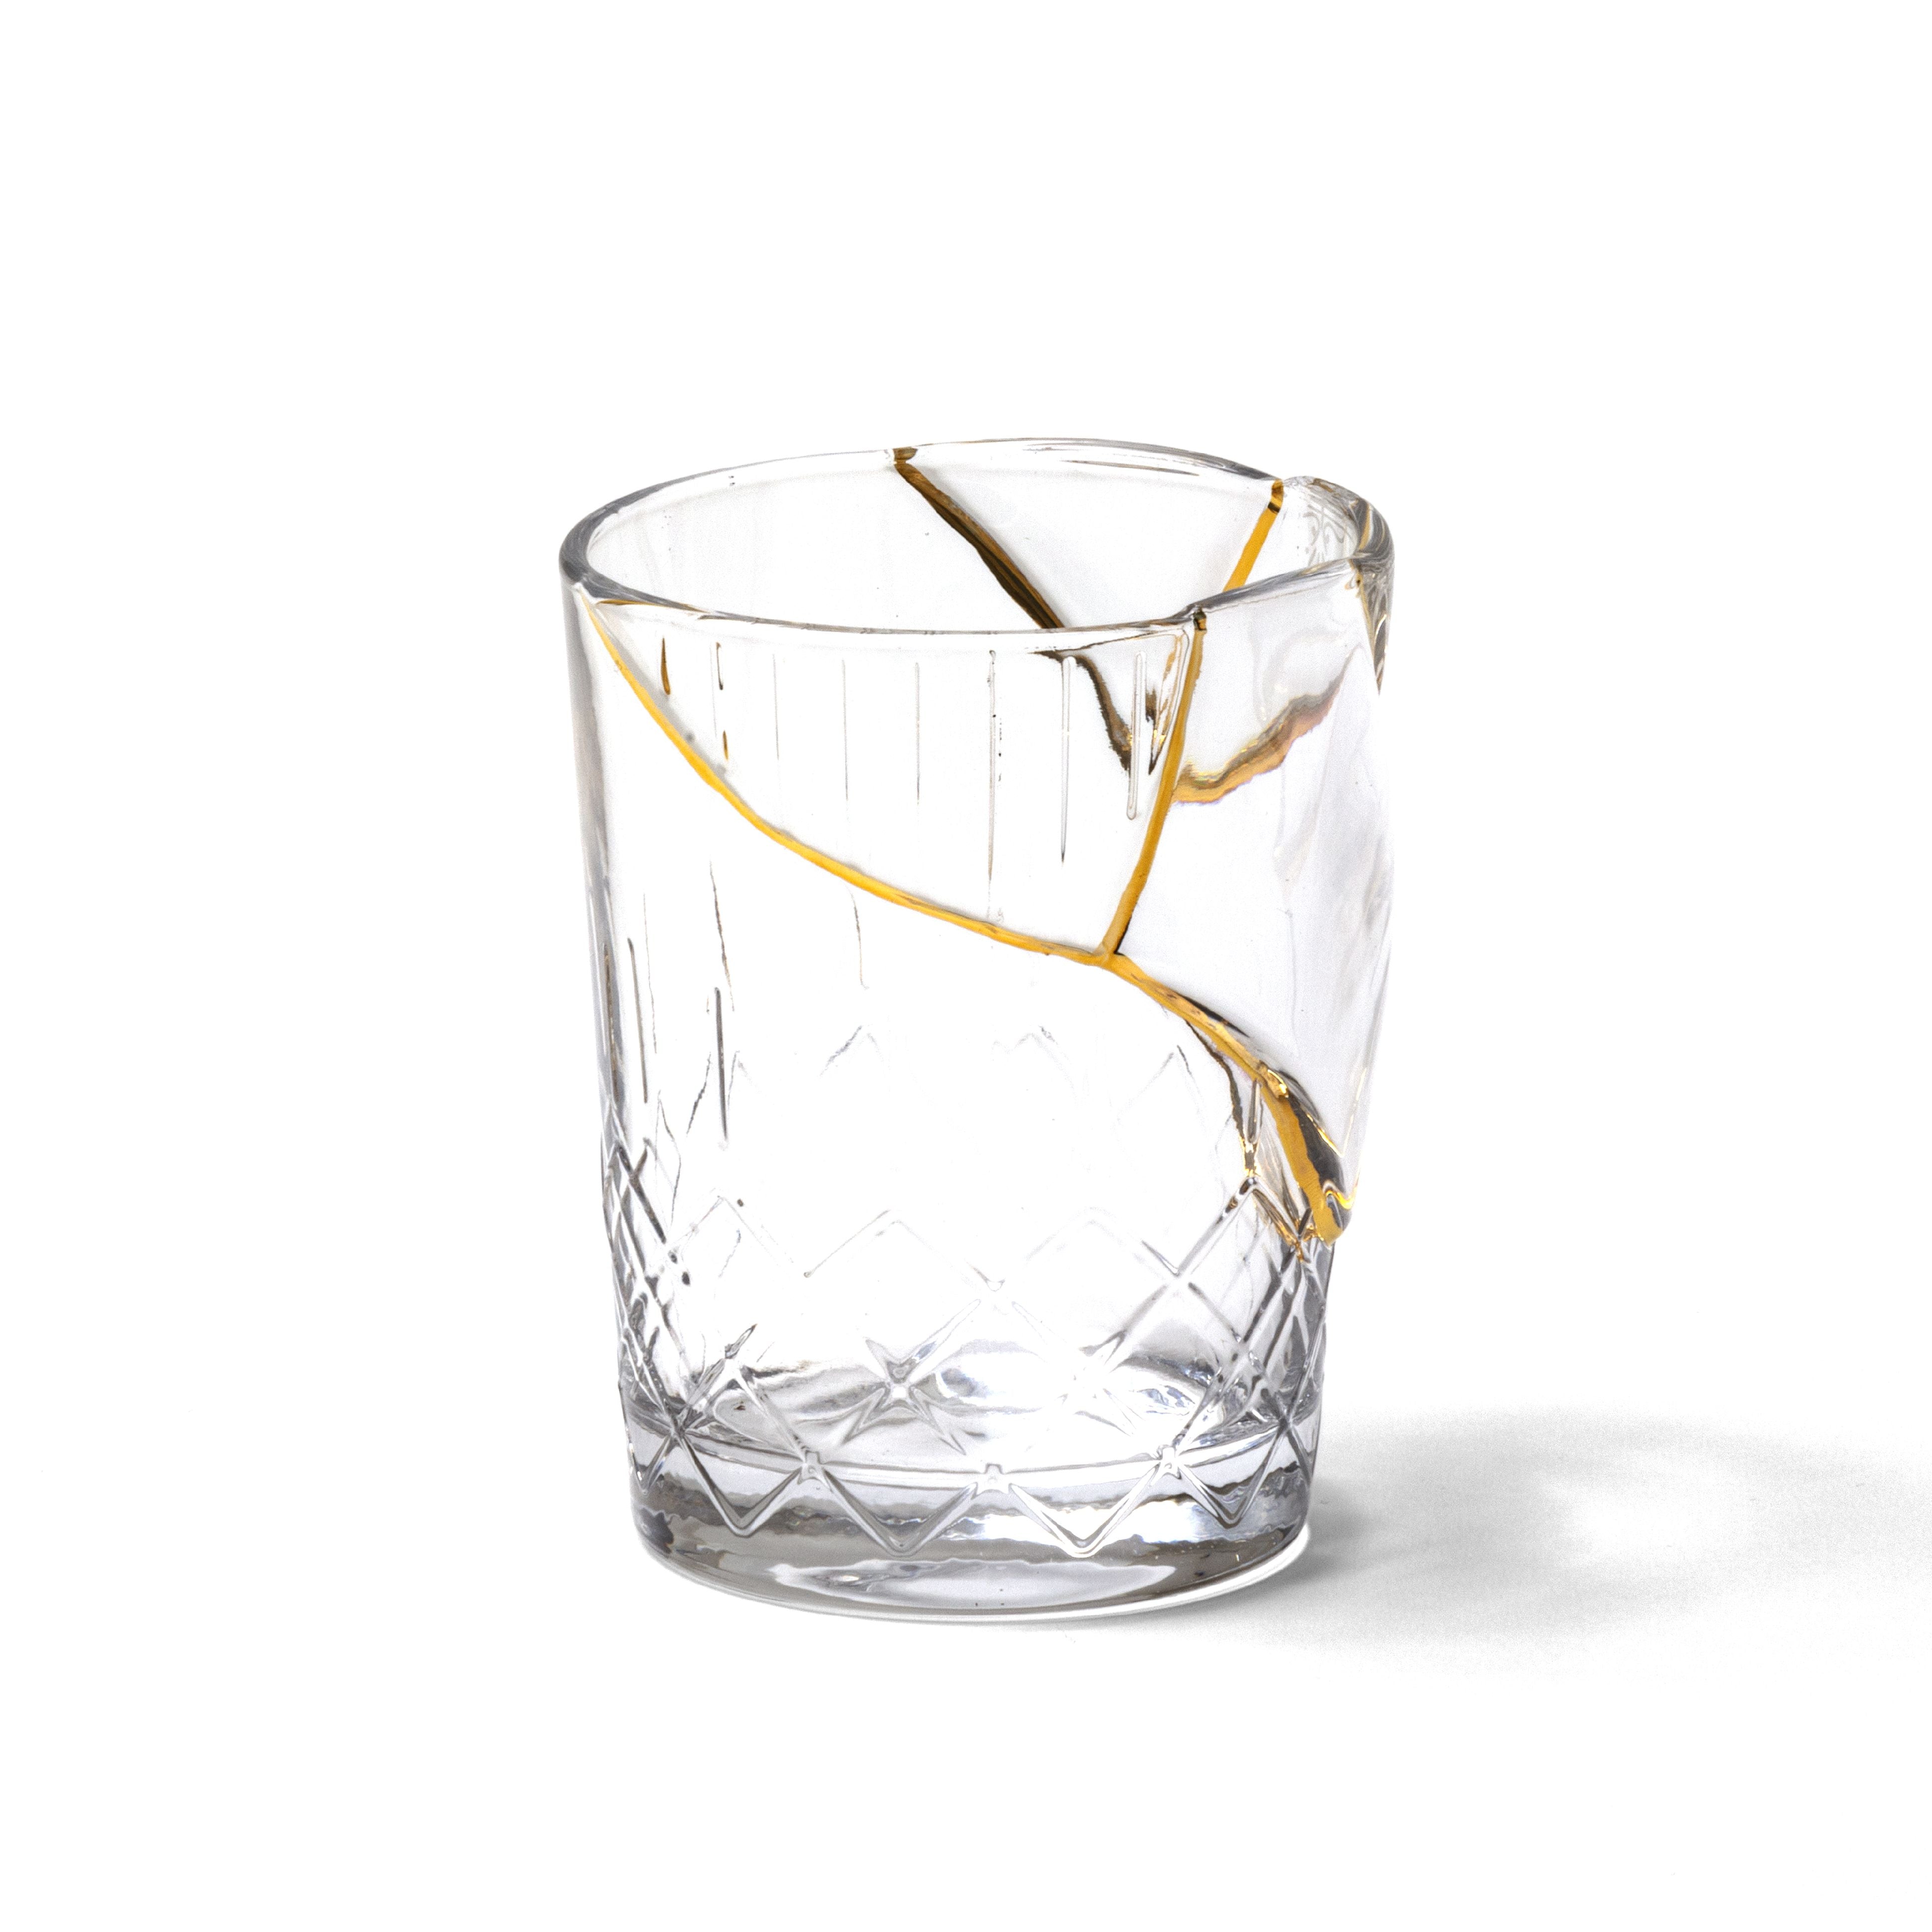 Seletti Kintsugi Glass, No. 1